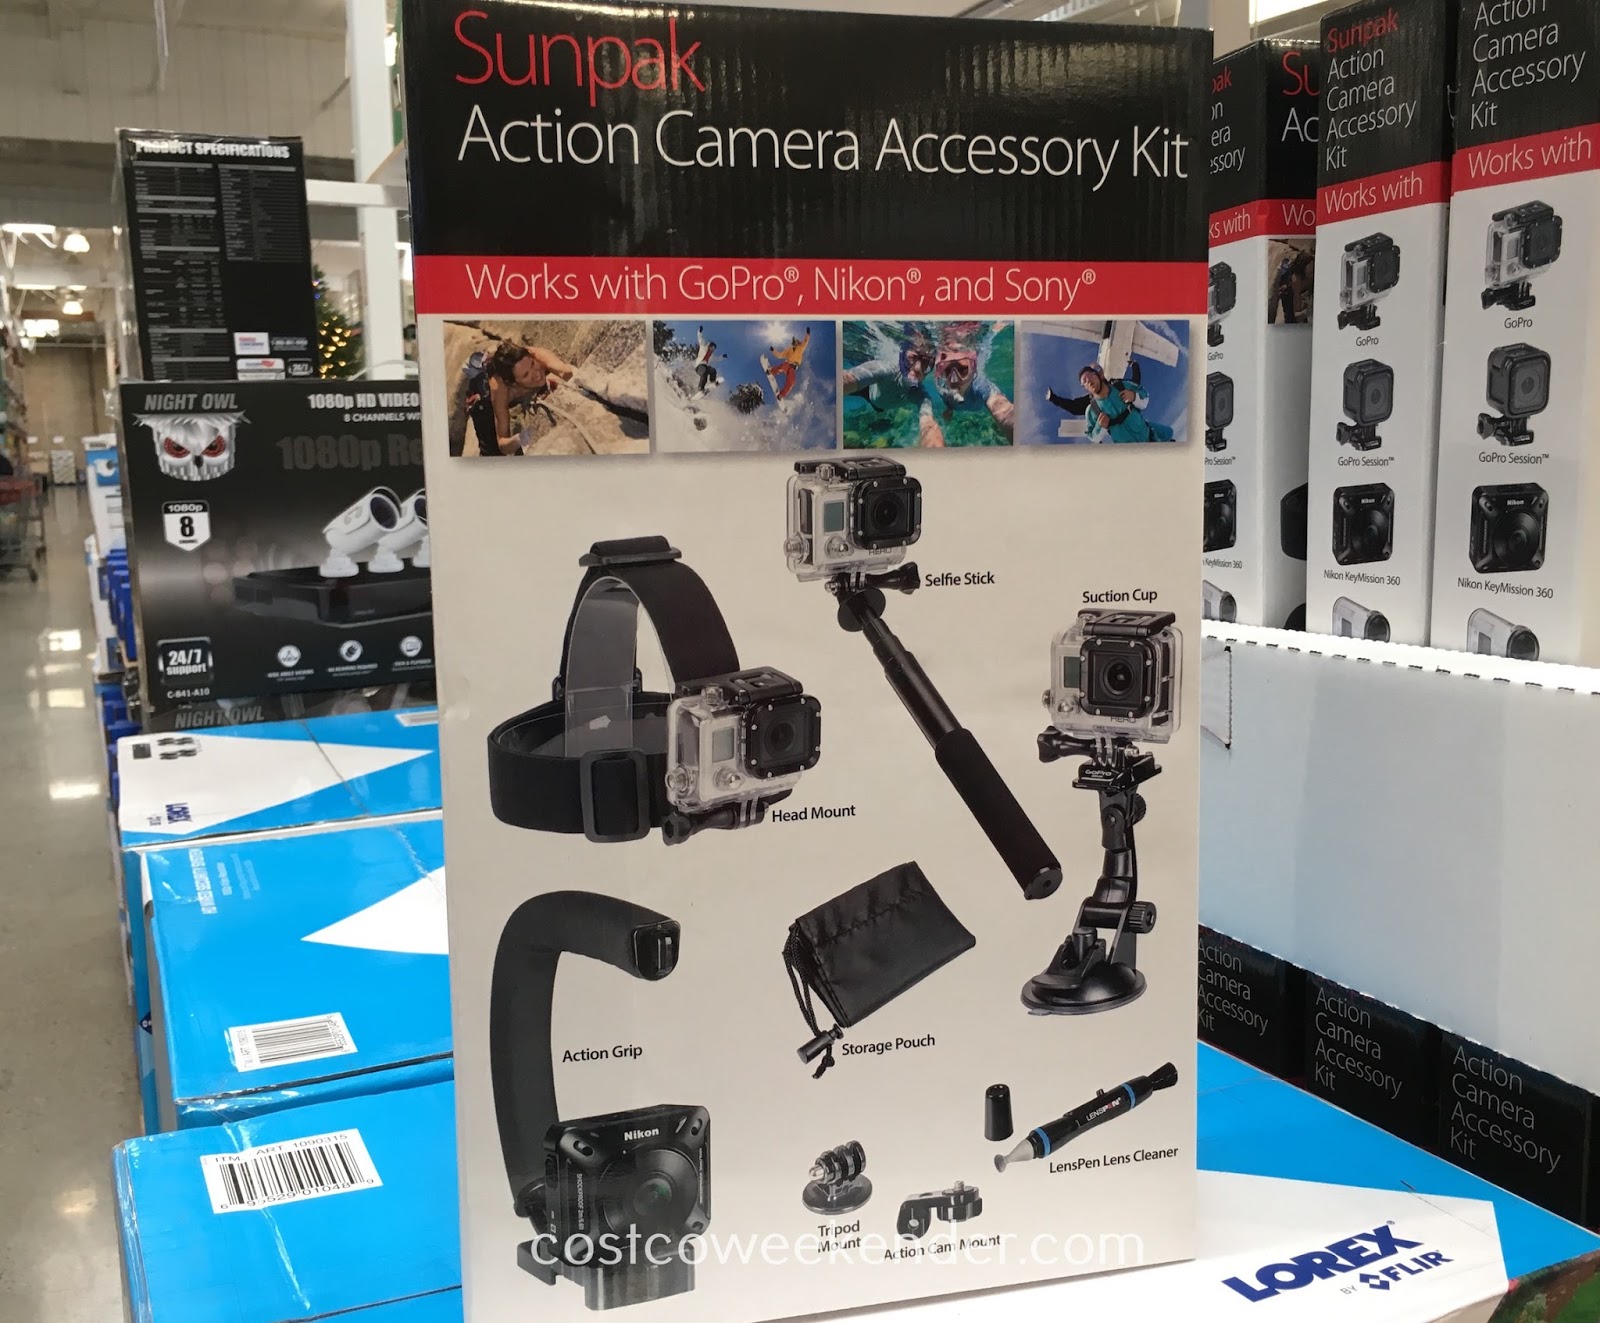 costco-sunpak-action-camera-accessory-kit-1064368.JPG